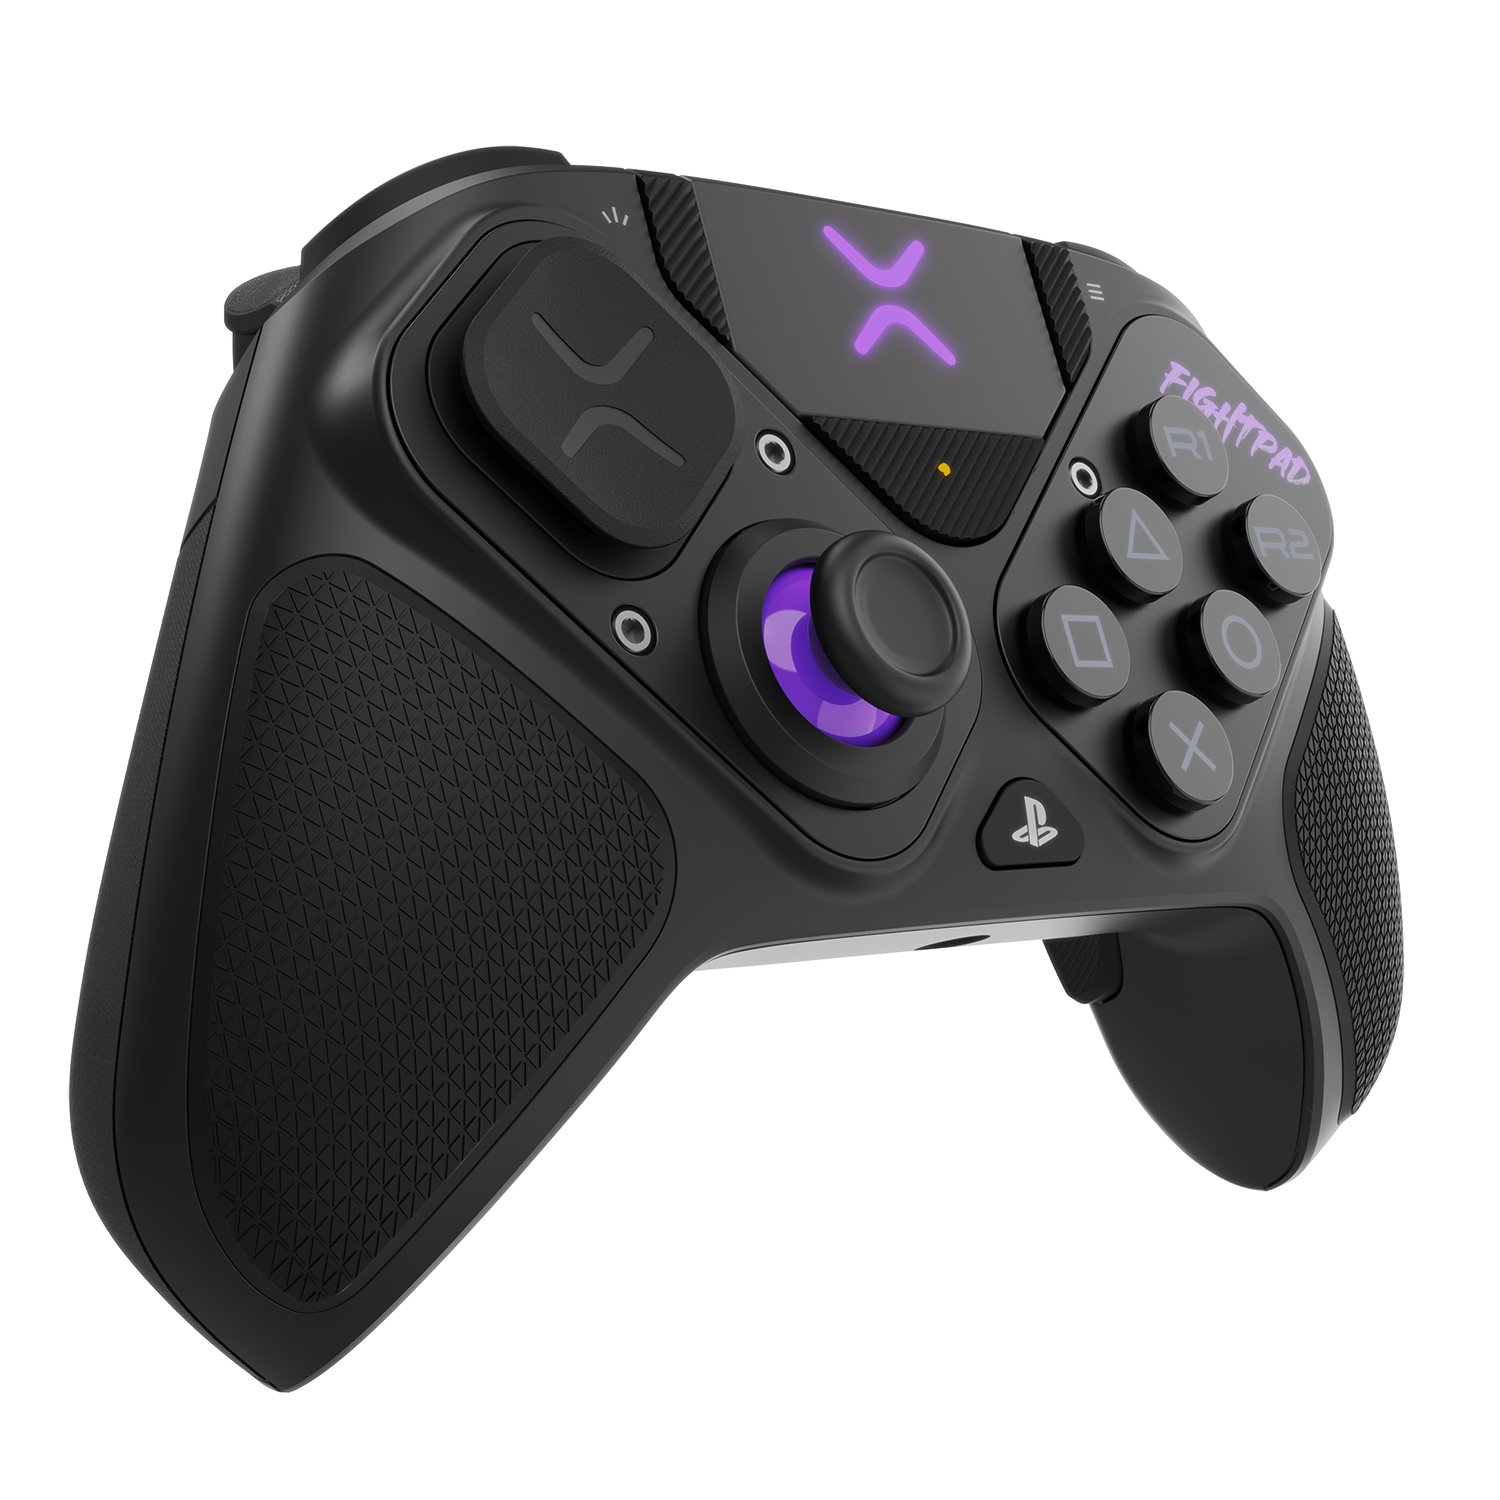 PS5: controle Pro modular é anunciado pela Victrix